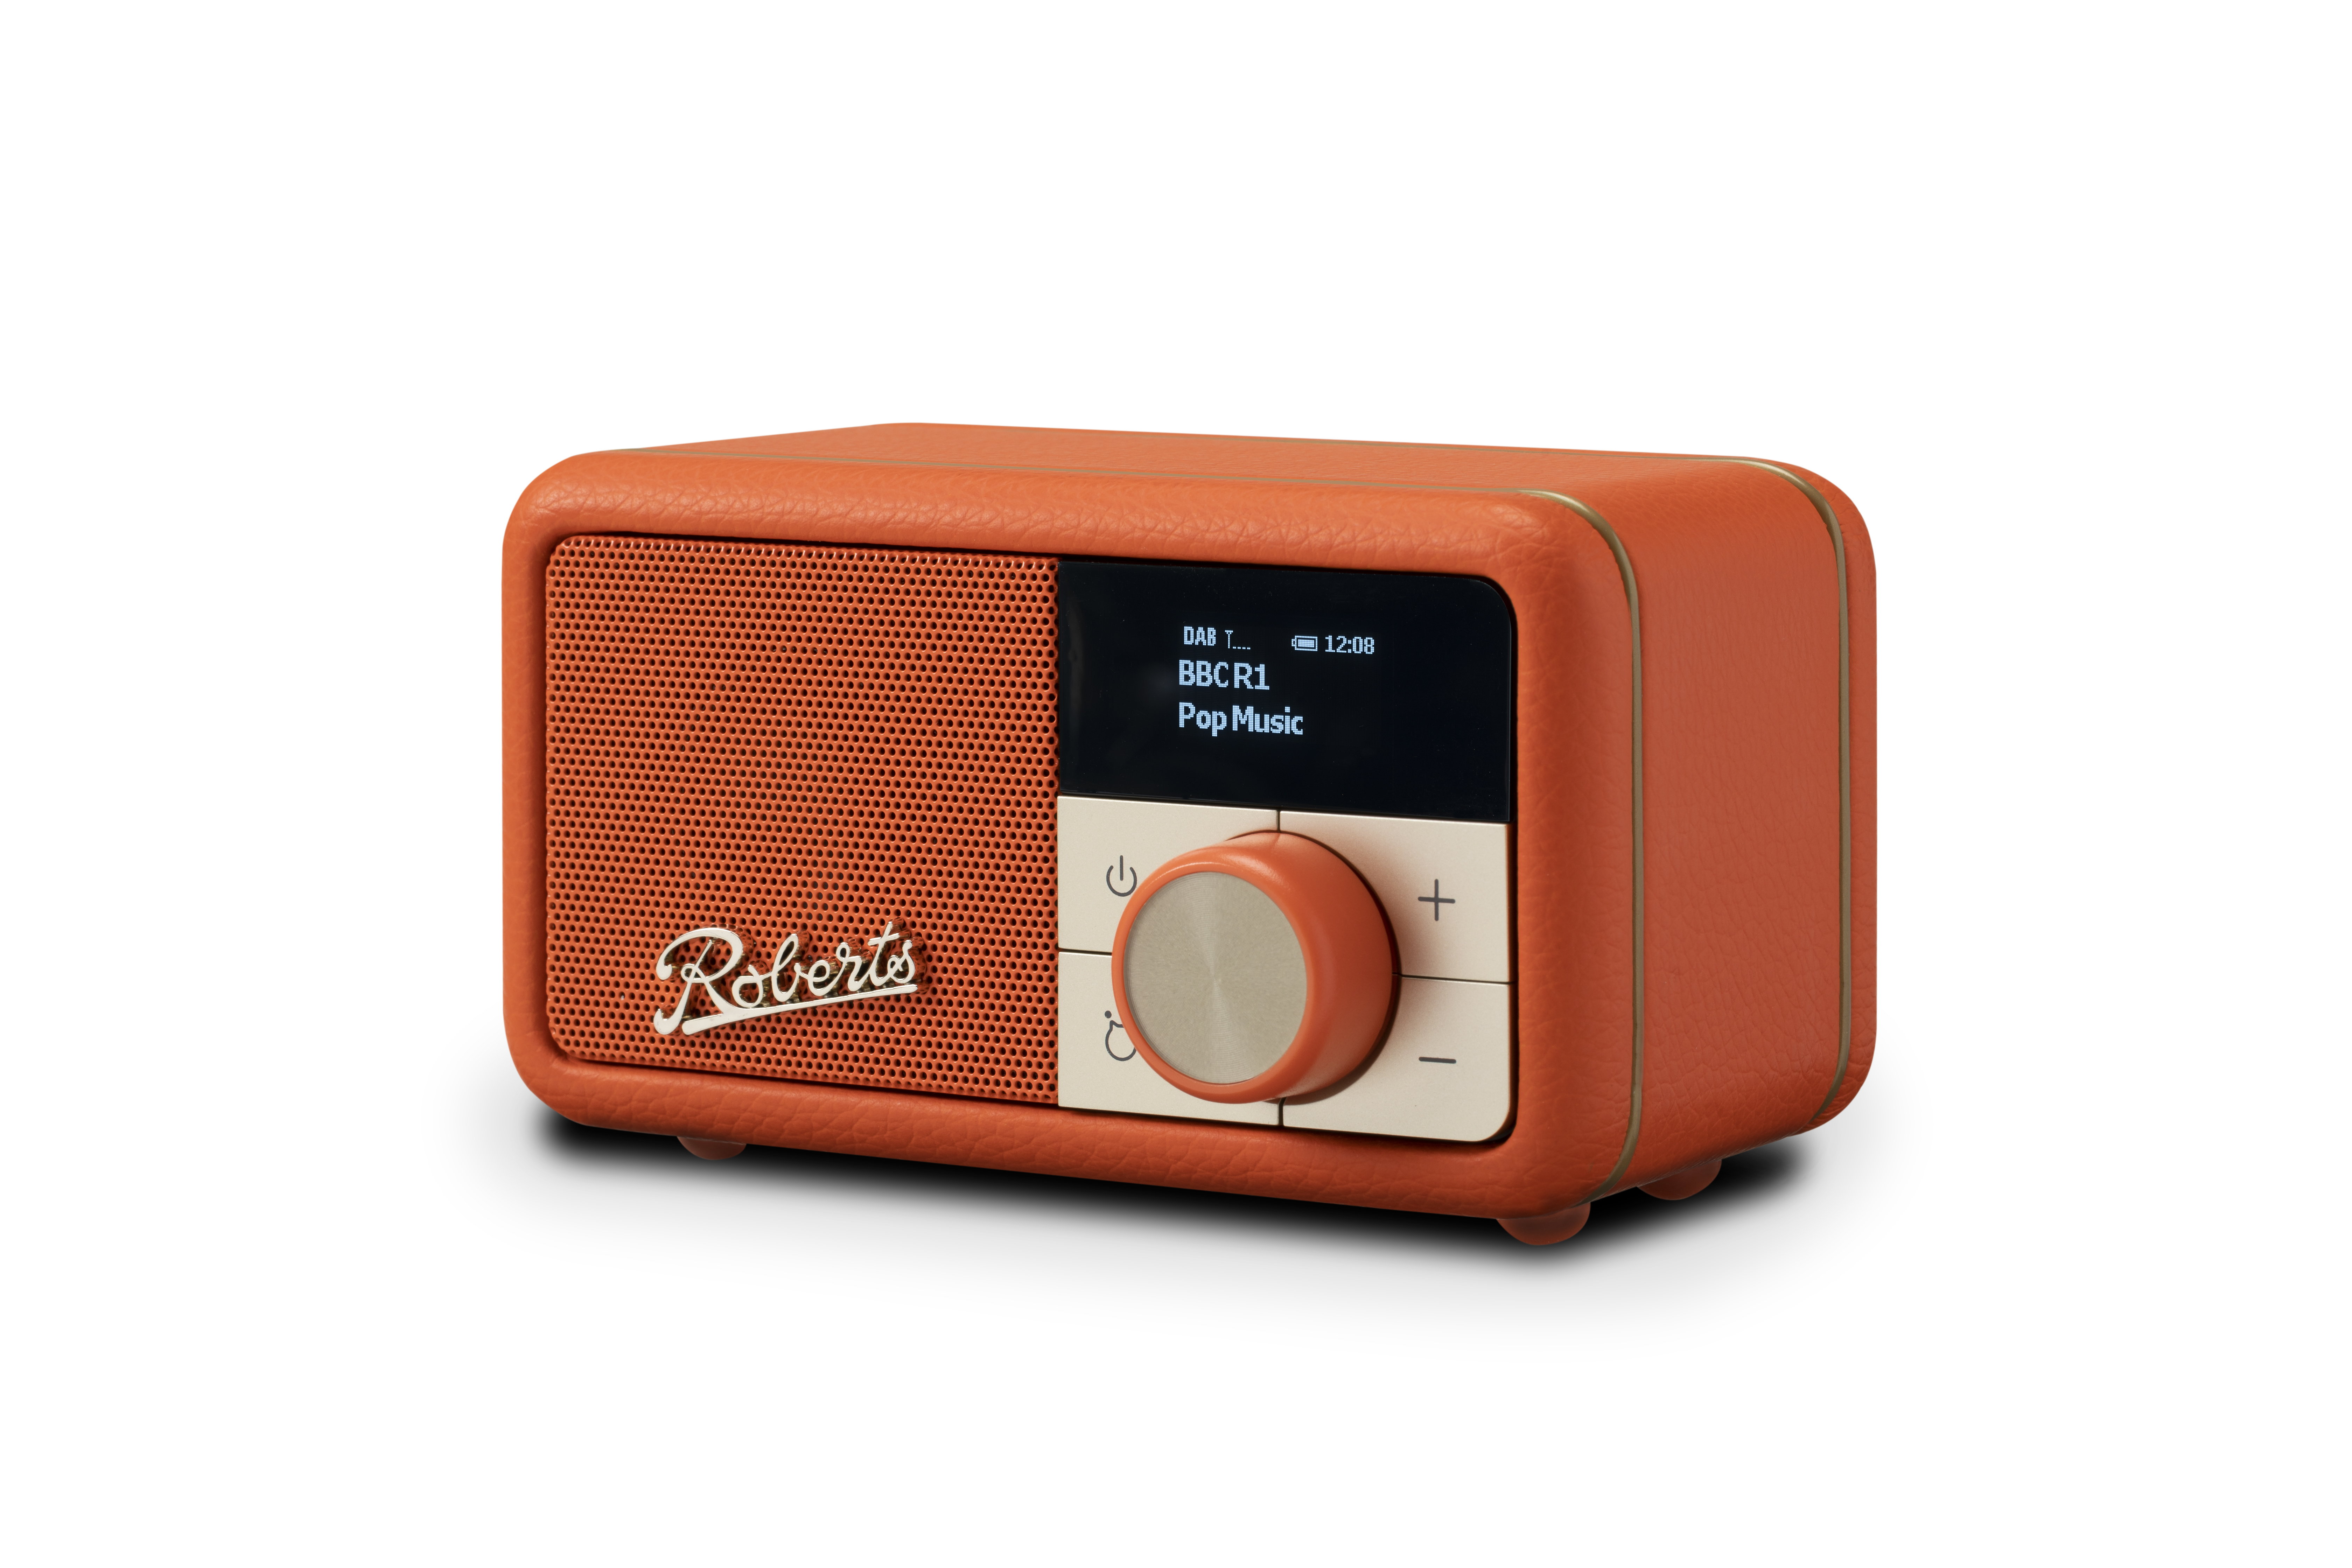 / RADIO mit Akku Orange DAB+ Radio ROBERTS | tragbares Petite und integriertem Digitalradio, orange | Revival pop DAB+, FM Bluetooth